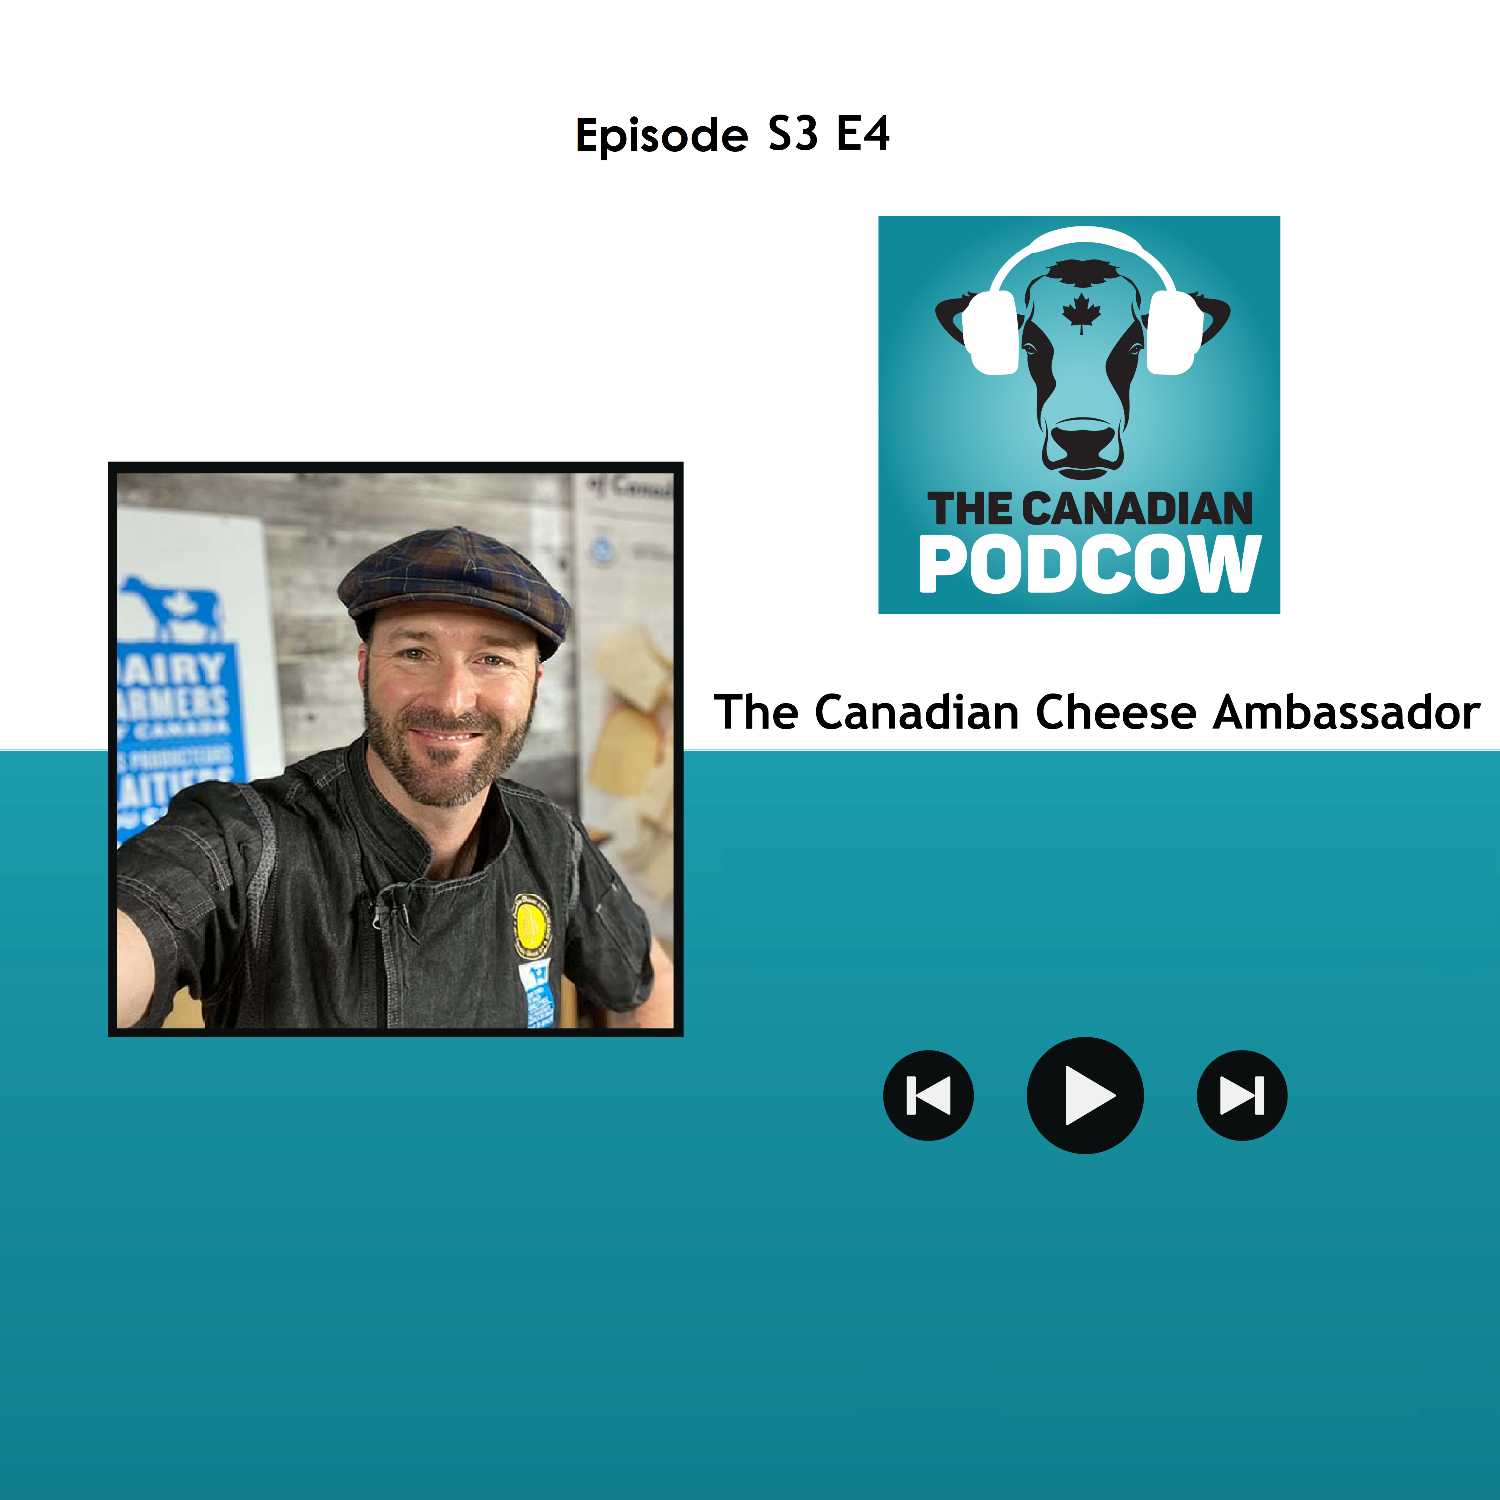 The Canadian Cheese Ambassador